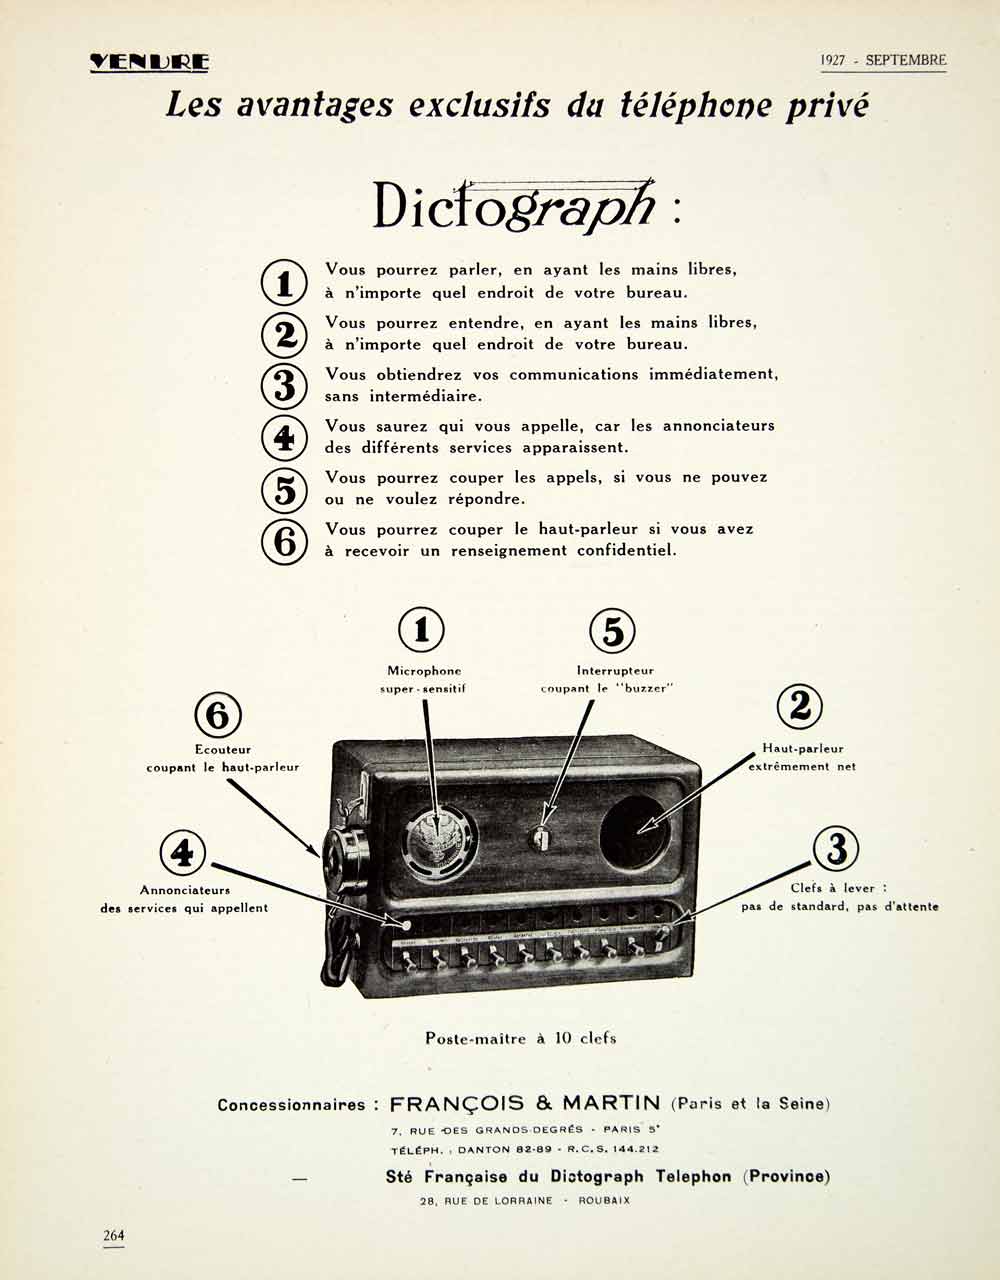 1927 Ad Dictograph Francois Martin Recorder Dictation machine 26 Rue VENA3